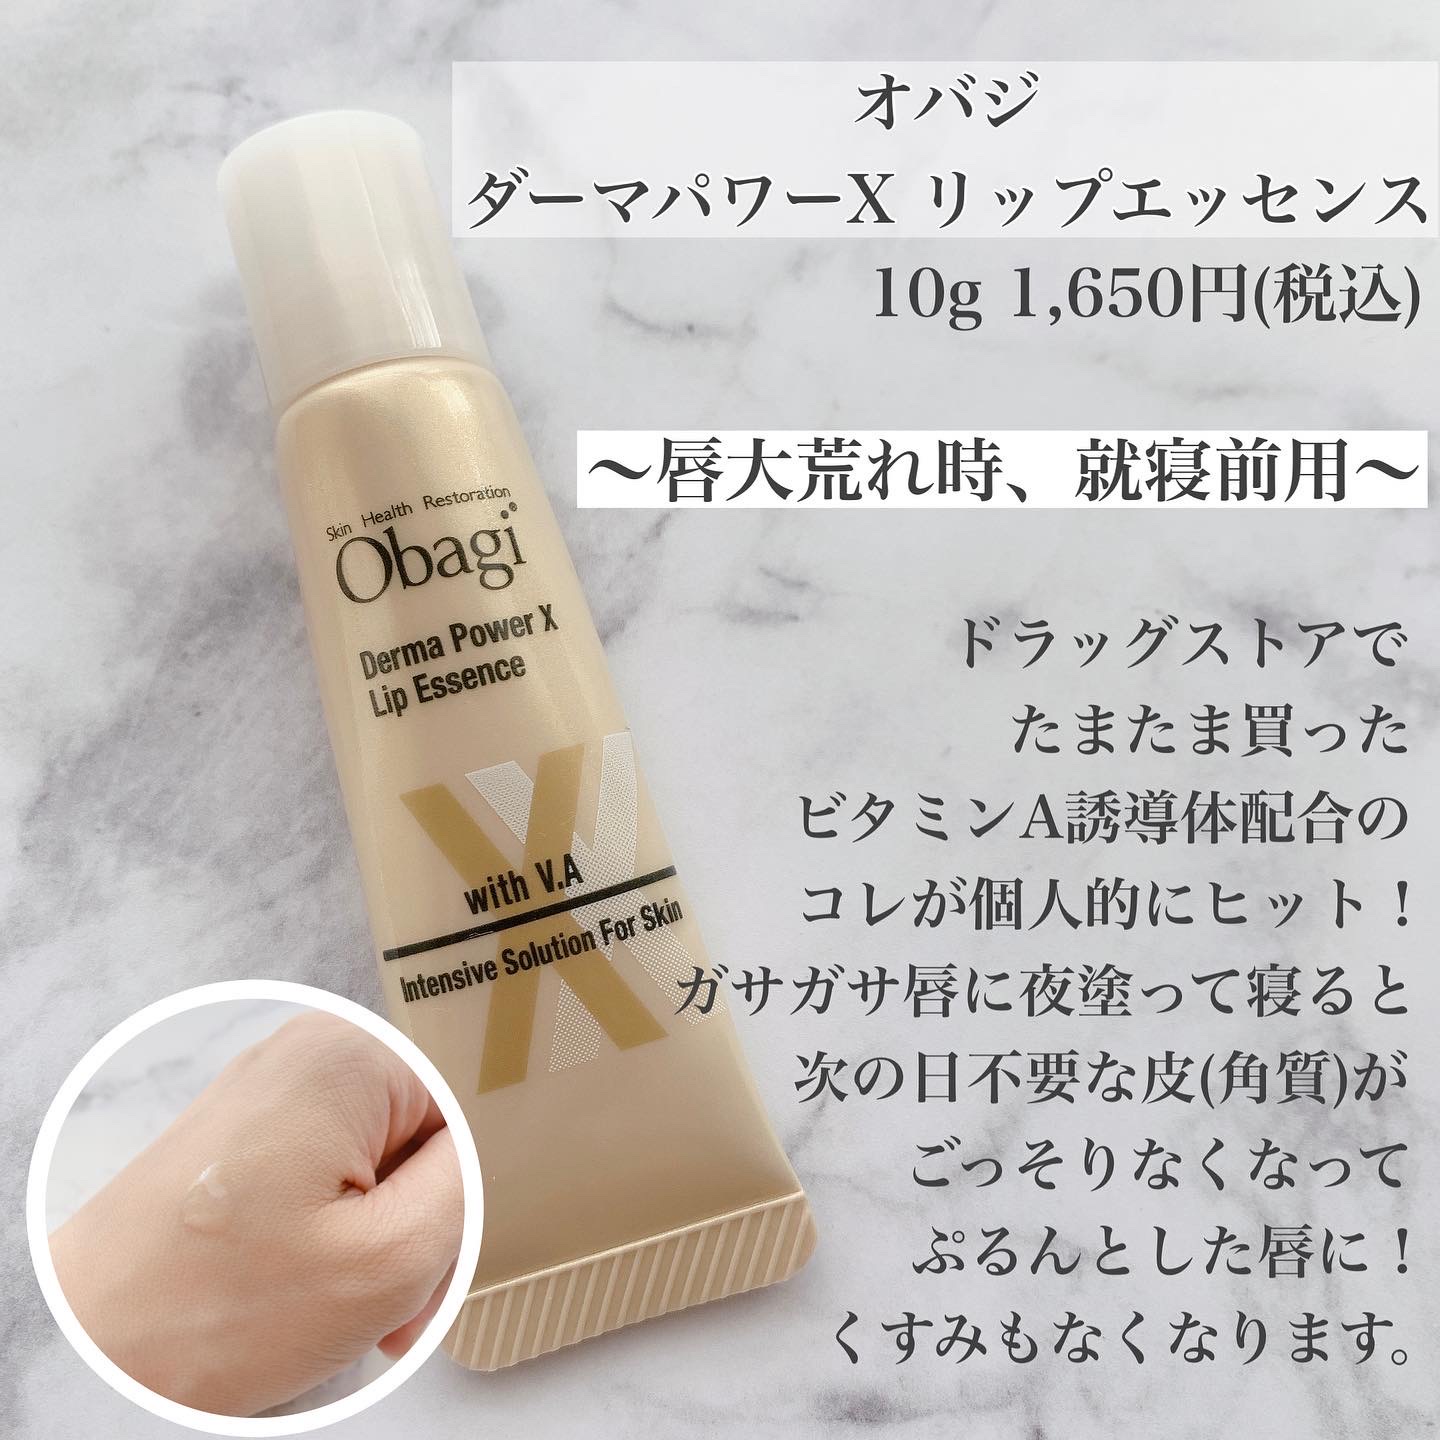 ObagiオバジダーマパワーXリップエッセンス1個 - スキンケア/基礎化粧品